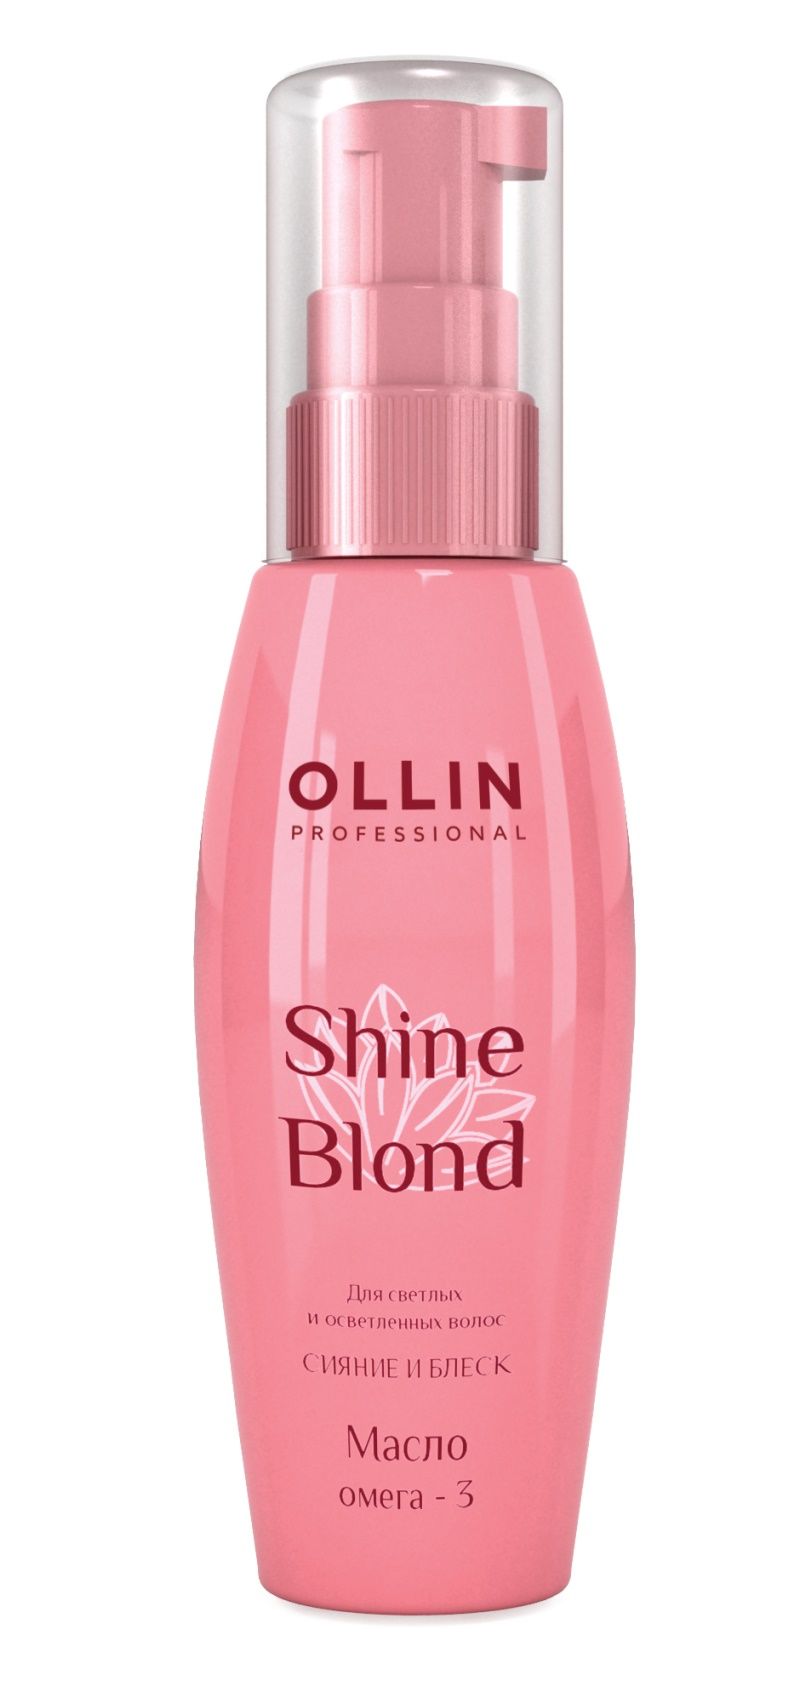 Масло для блонда. Ollin Shine blond - Оллин Шайн блонд масло Омега-3, 50 мл -. Ollin professional Shine blond масло Омега-3 для волос. Шаин блонд масло Оллин. Масло Омега 3 Оллин.